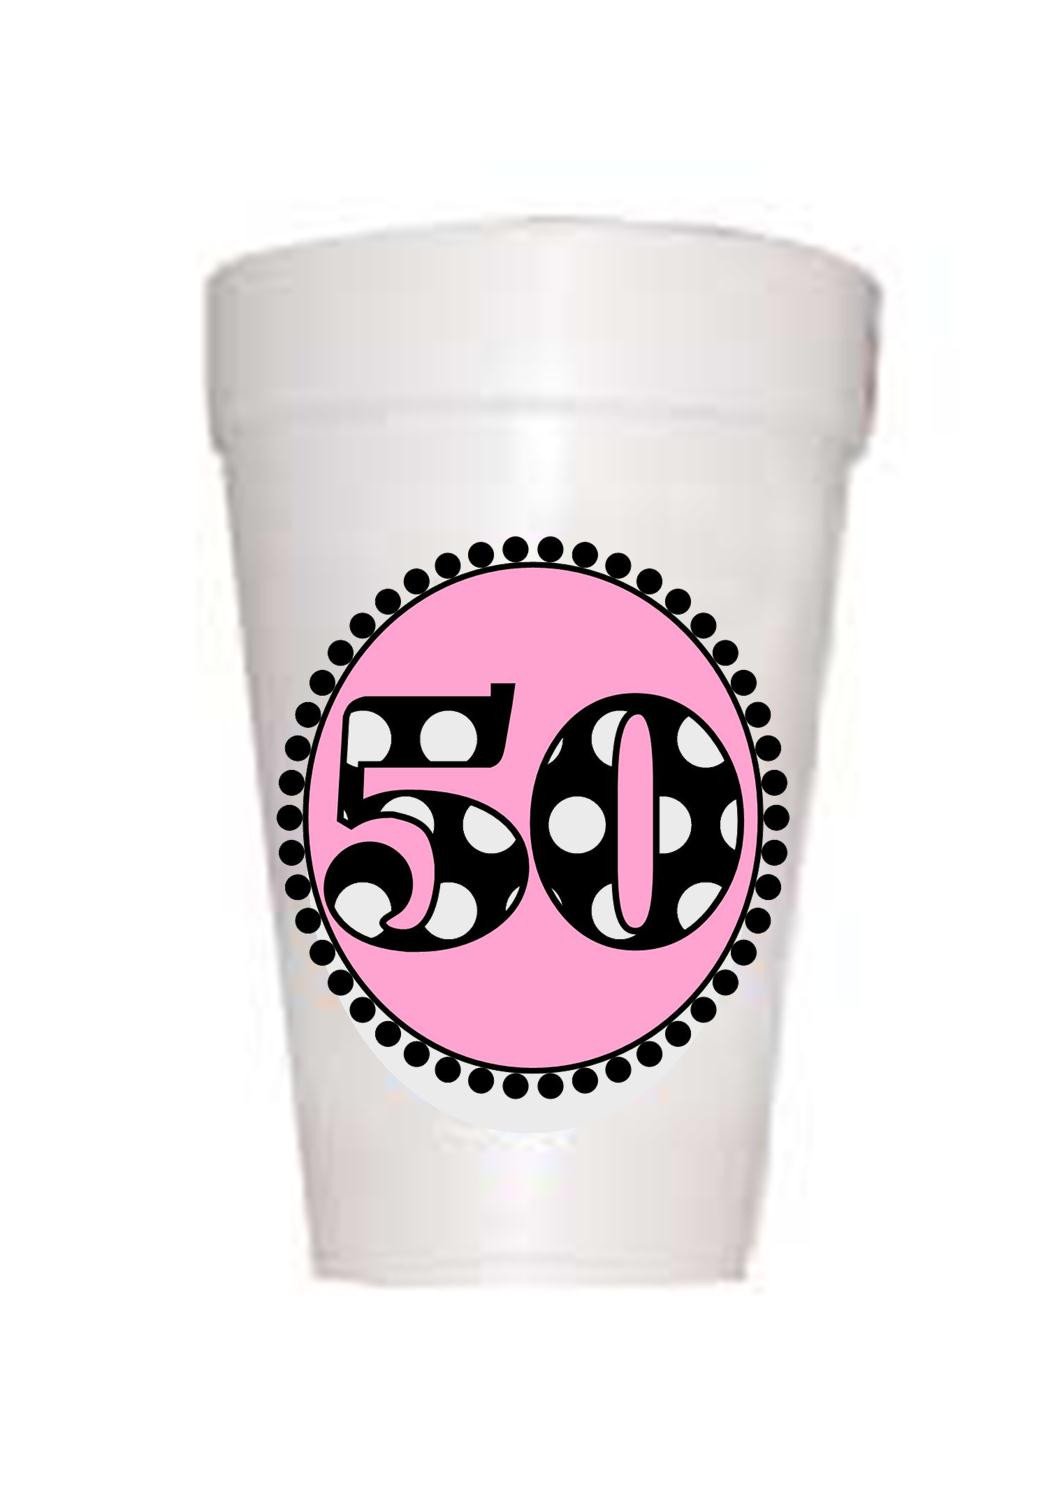 50th Birthday Styrofoam Cups in pink with black polka dot 50